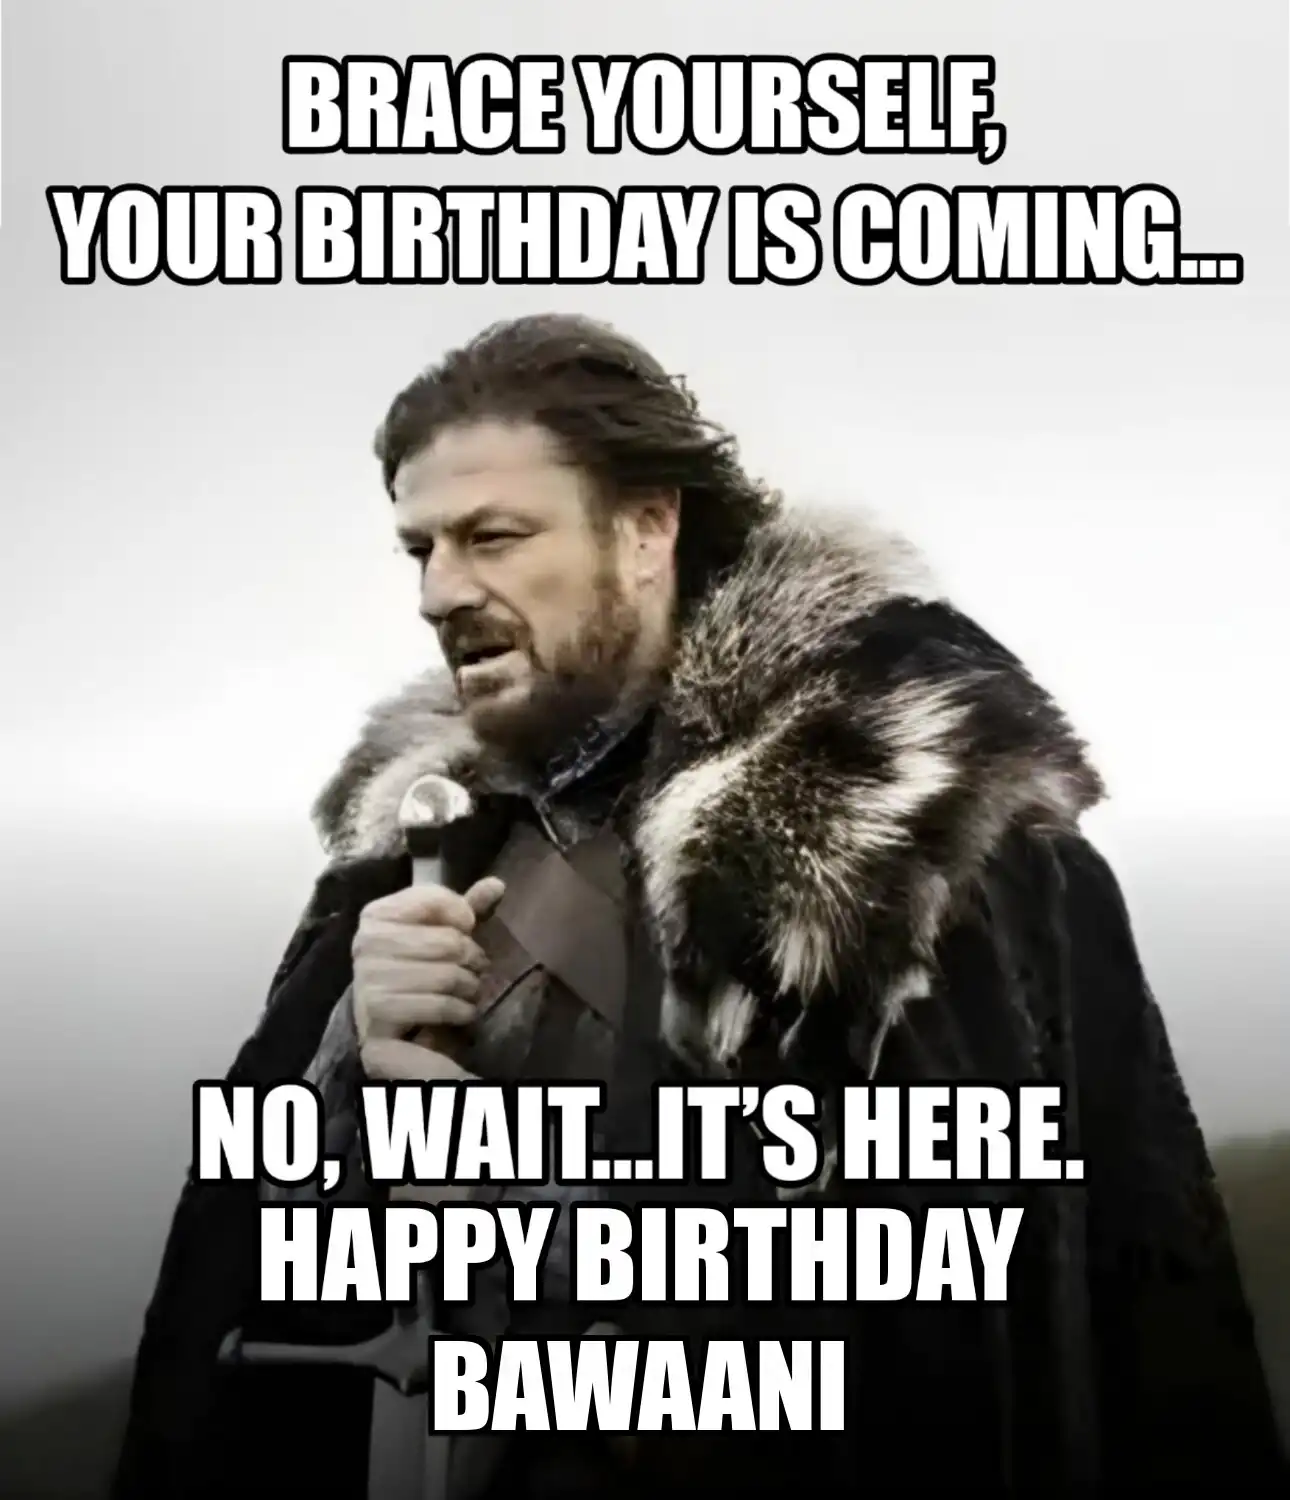 Happy Birthday Bawaani Brace Yourself Your Birthday Is Coming Meme